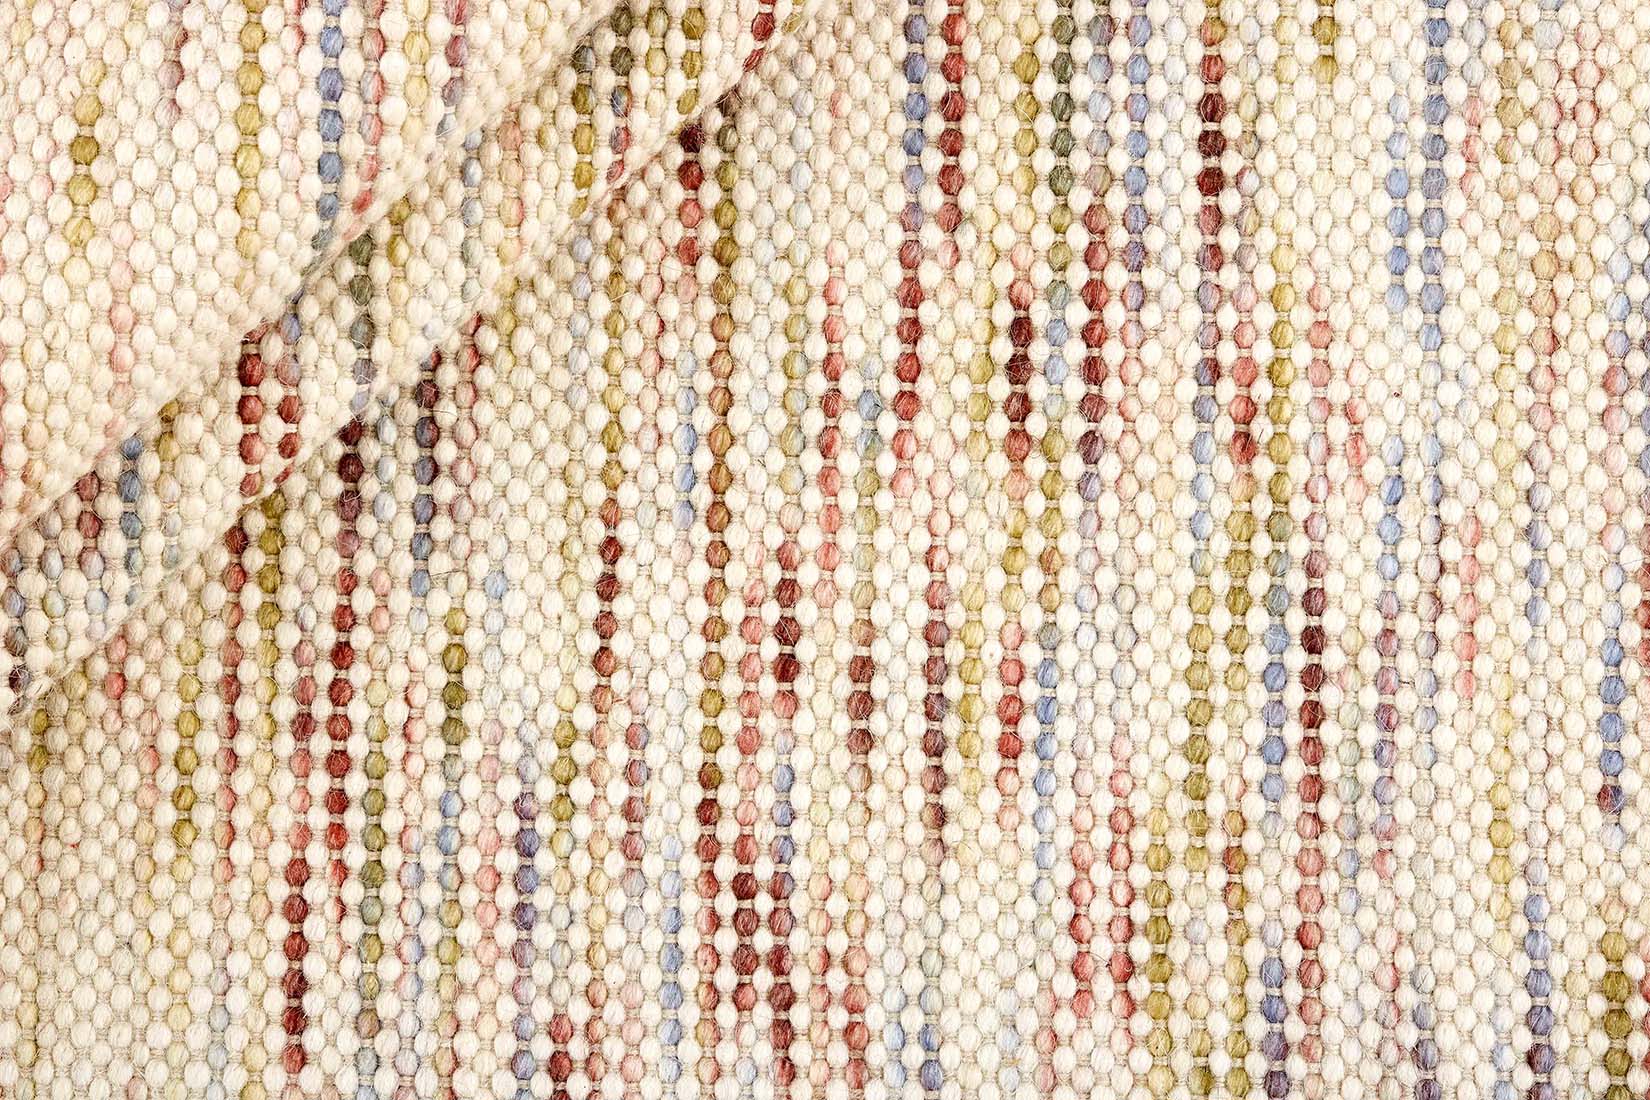 Multicolour textured area rug
